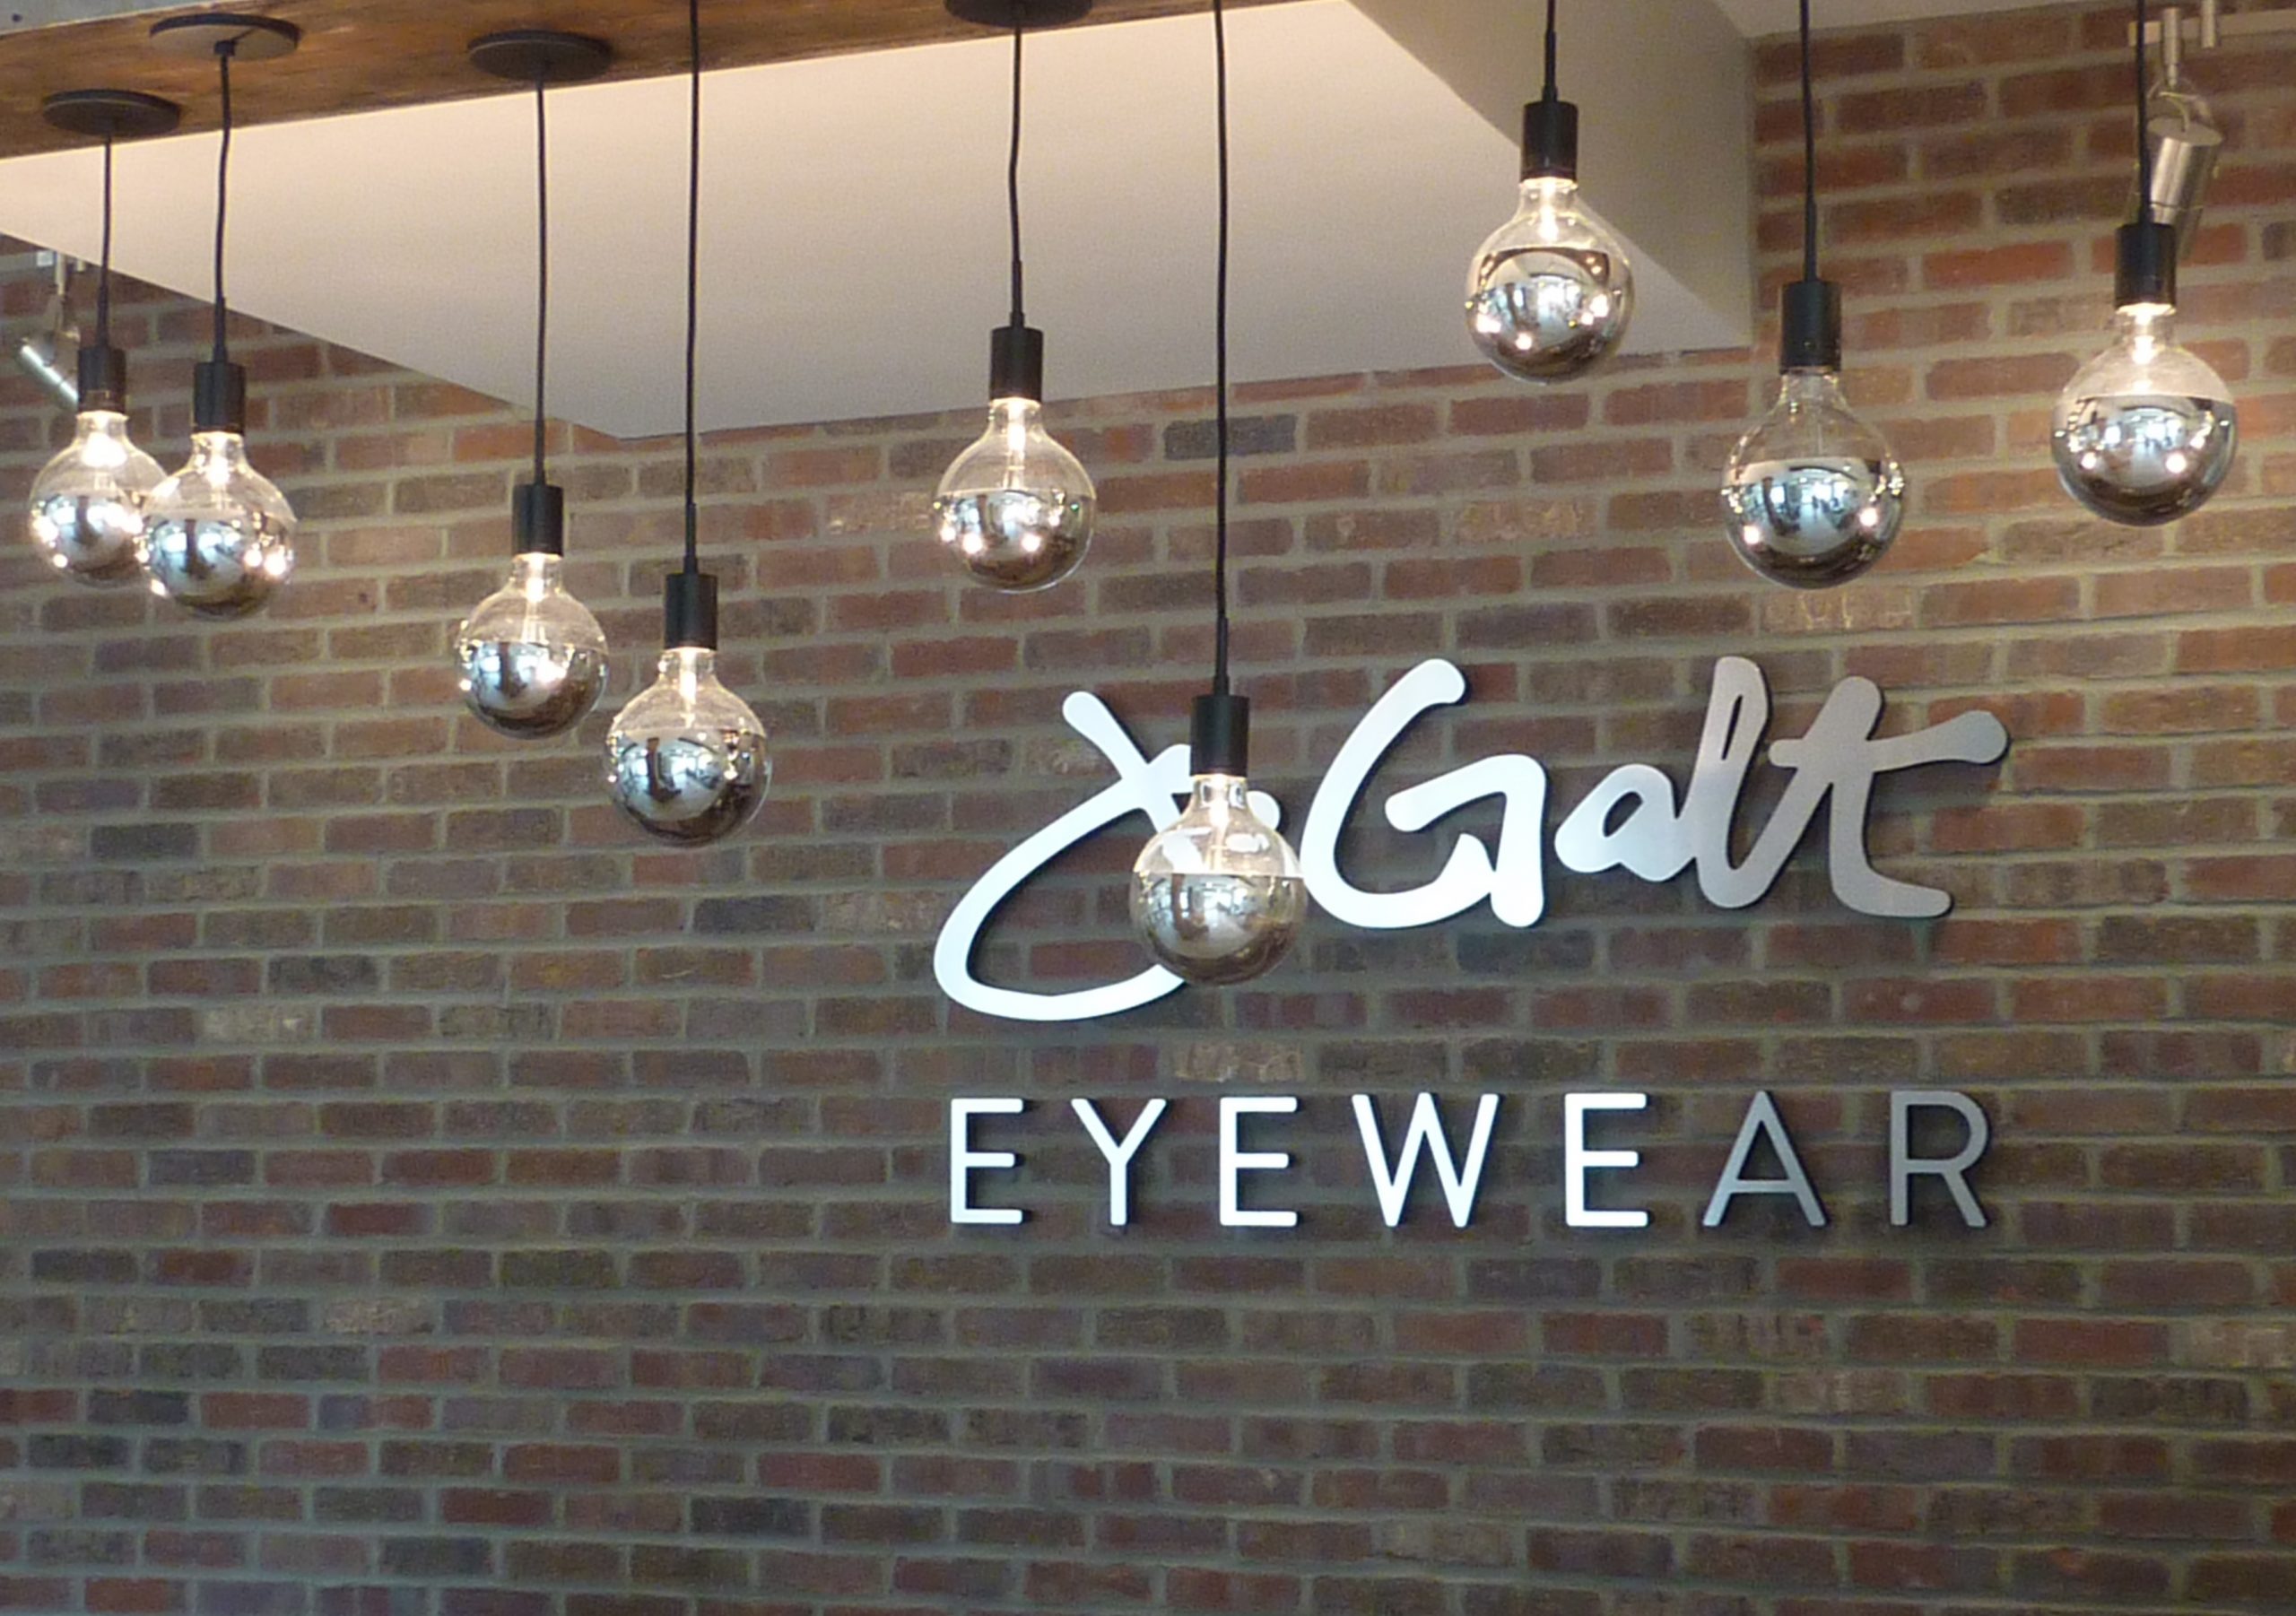 Galt Eye Wear/Prints